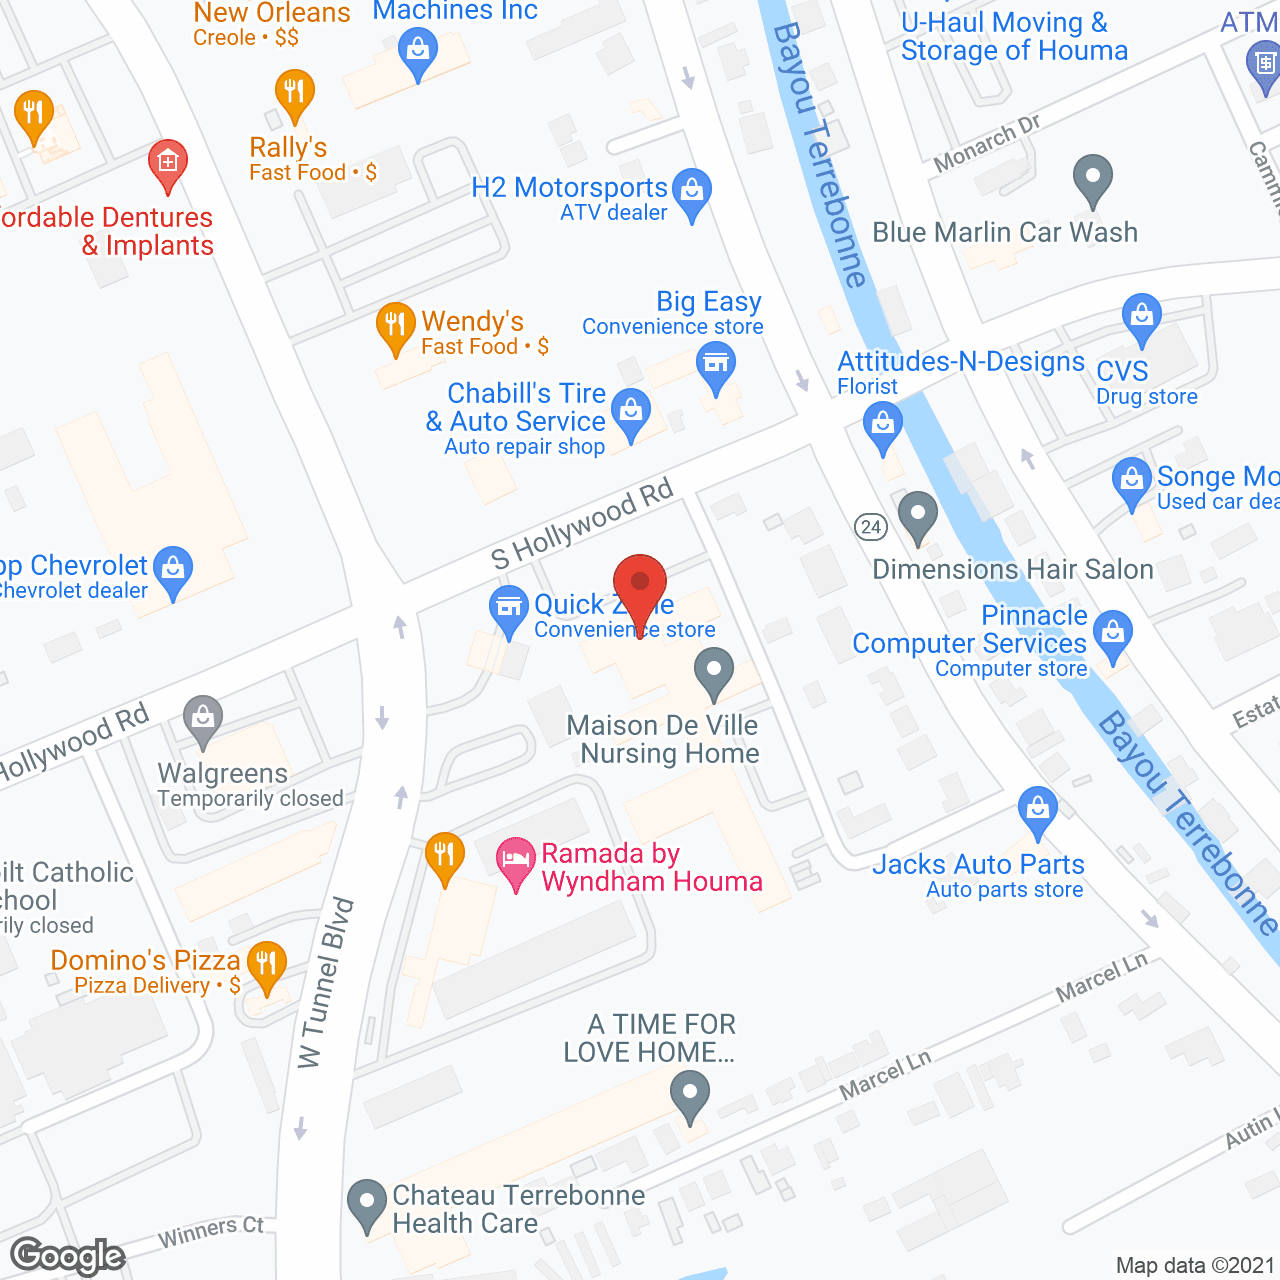 Maison De Ville Nursing Home of Houma in google map